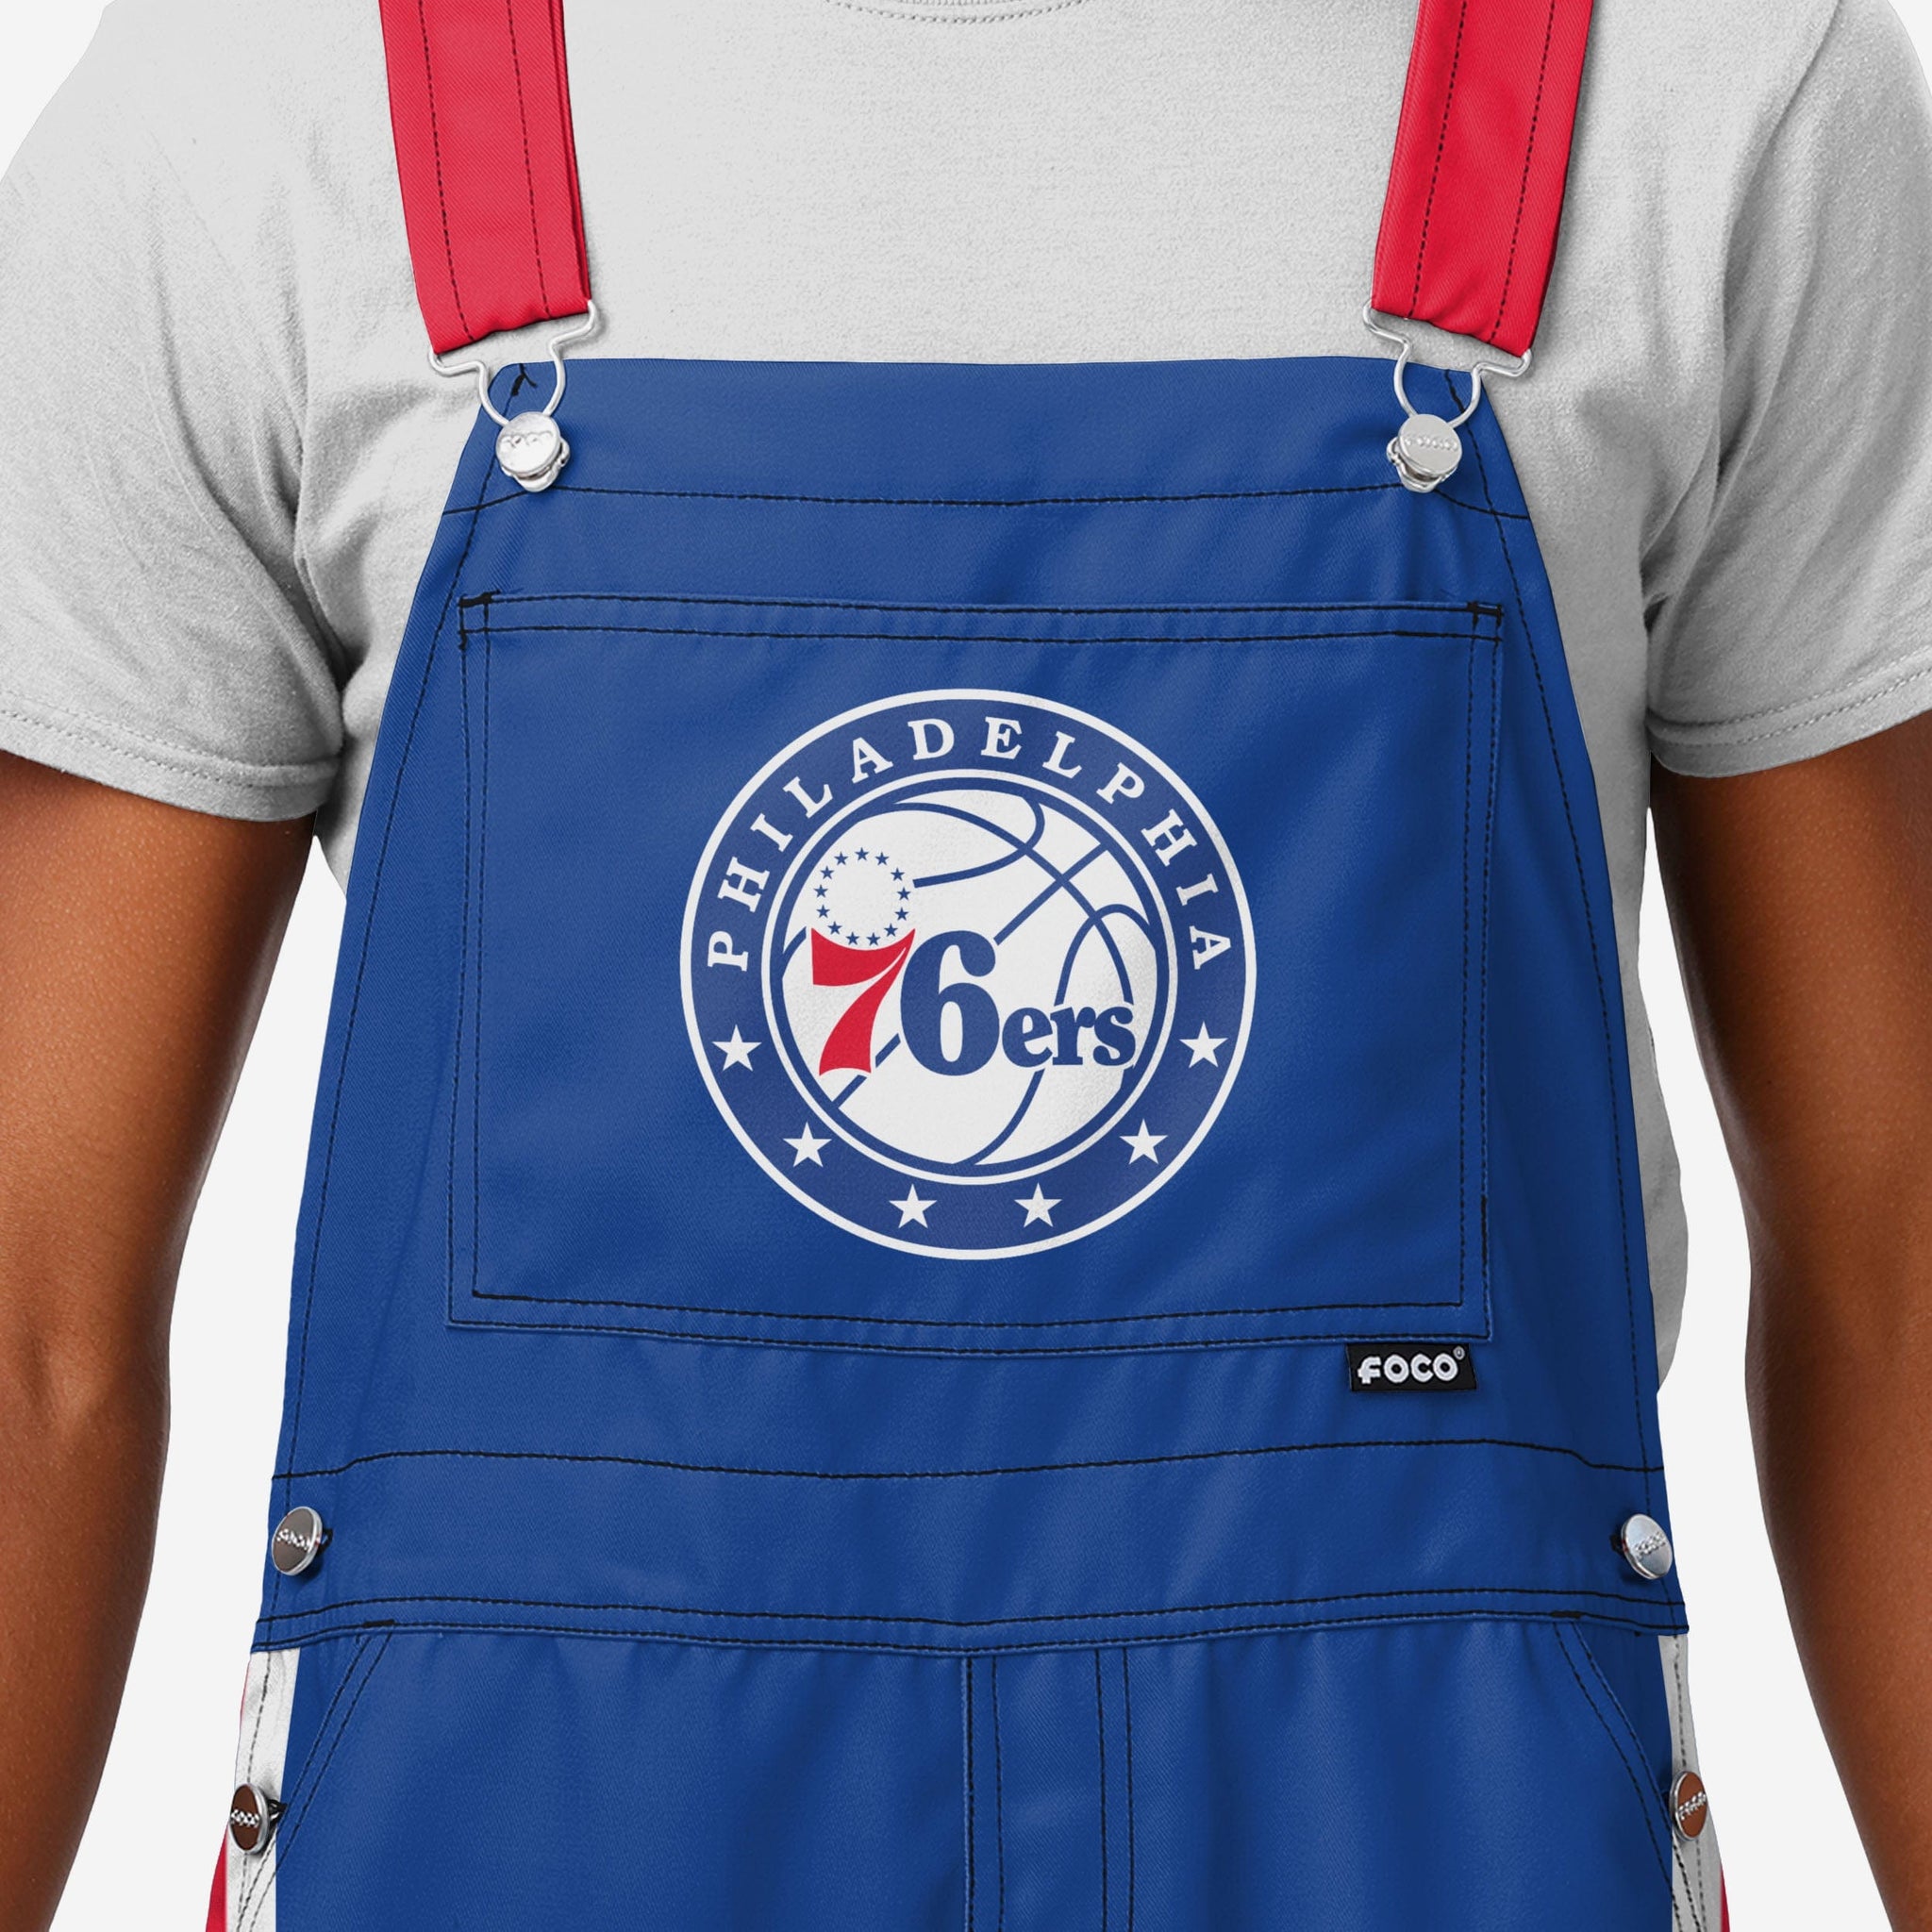 Philadelphia 76ers Apparel, Collectibles, and Fan Gear. FOCO